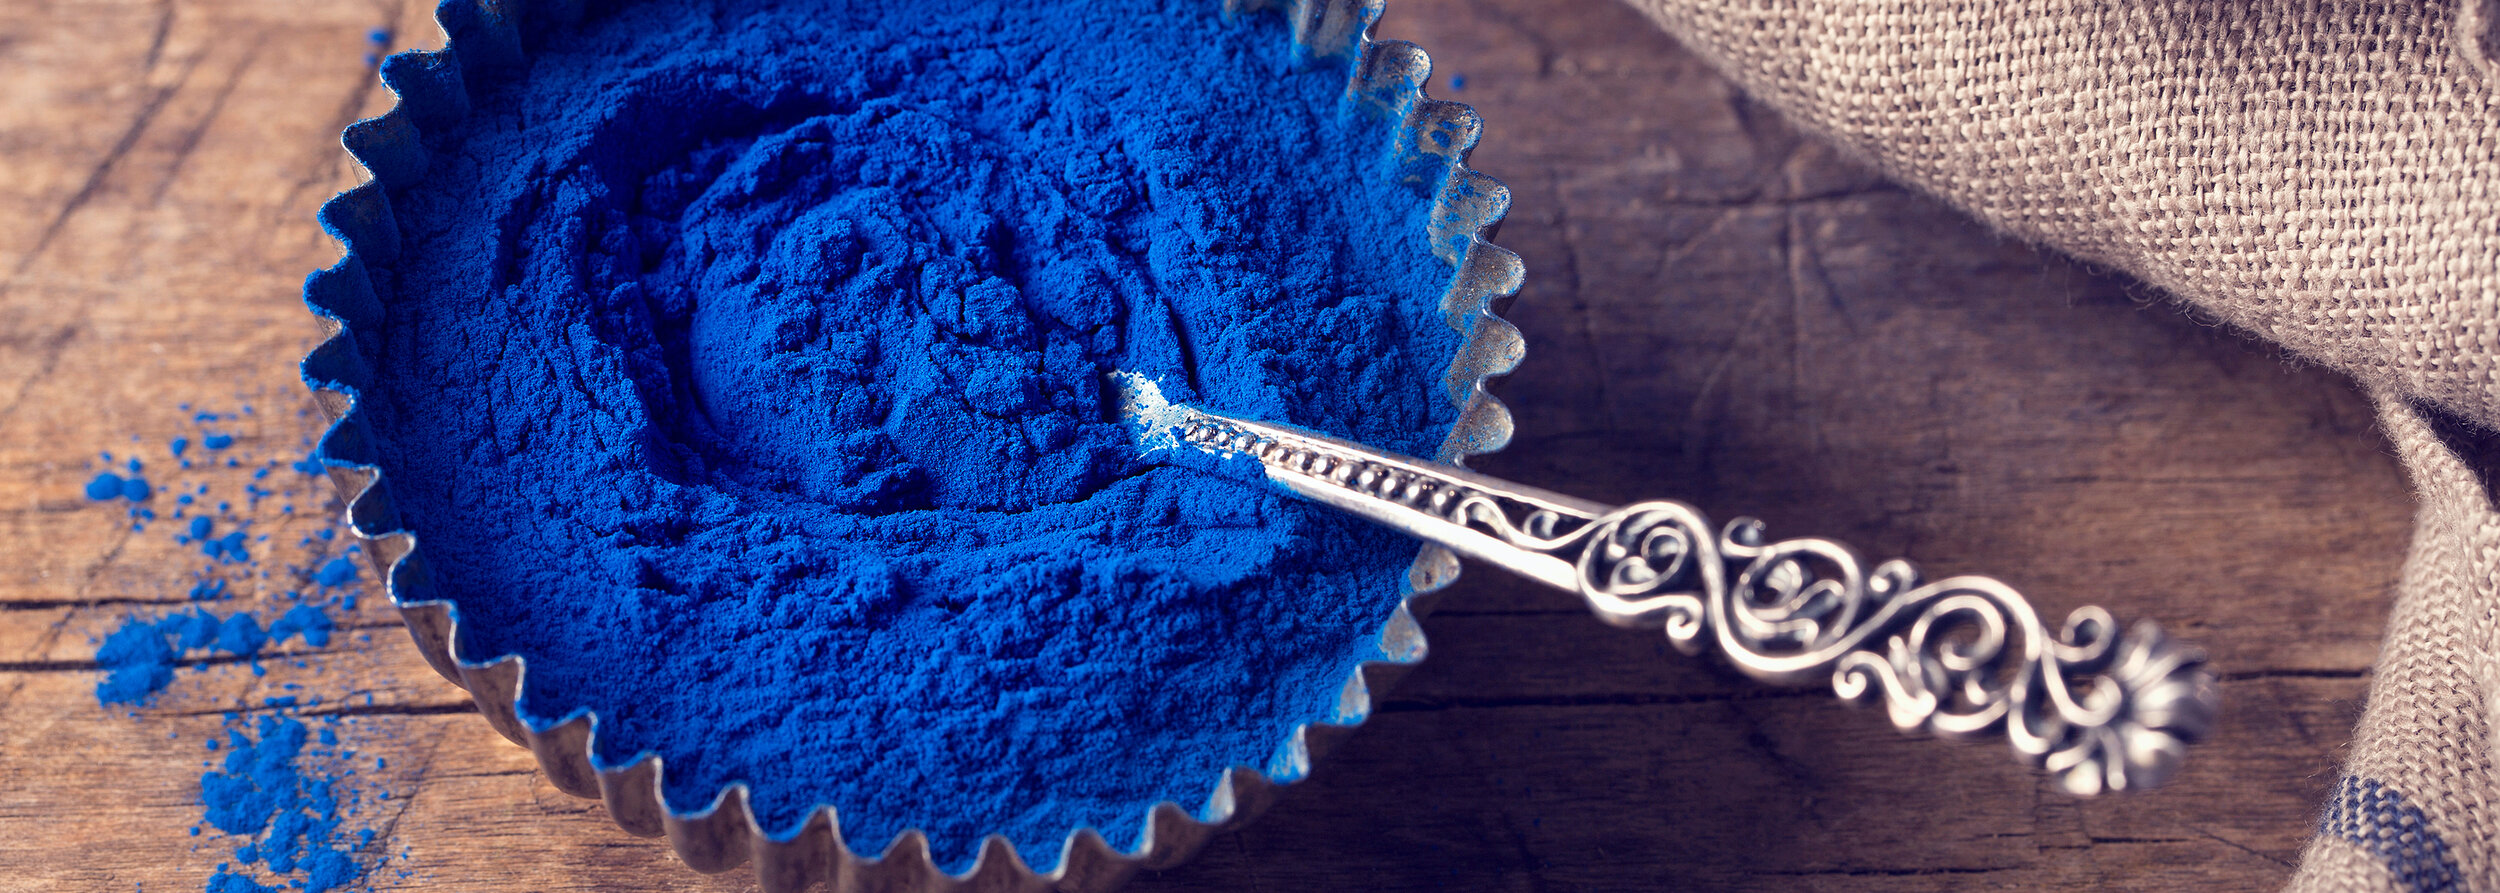 bigstock-Blue-spirulina-powder-in-a-sma-319614088.jpg